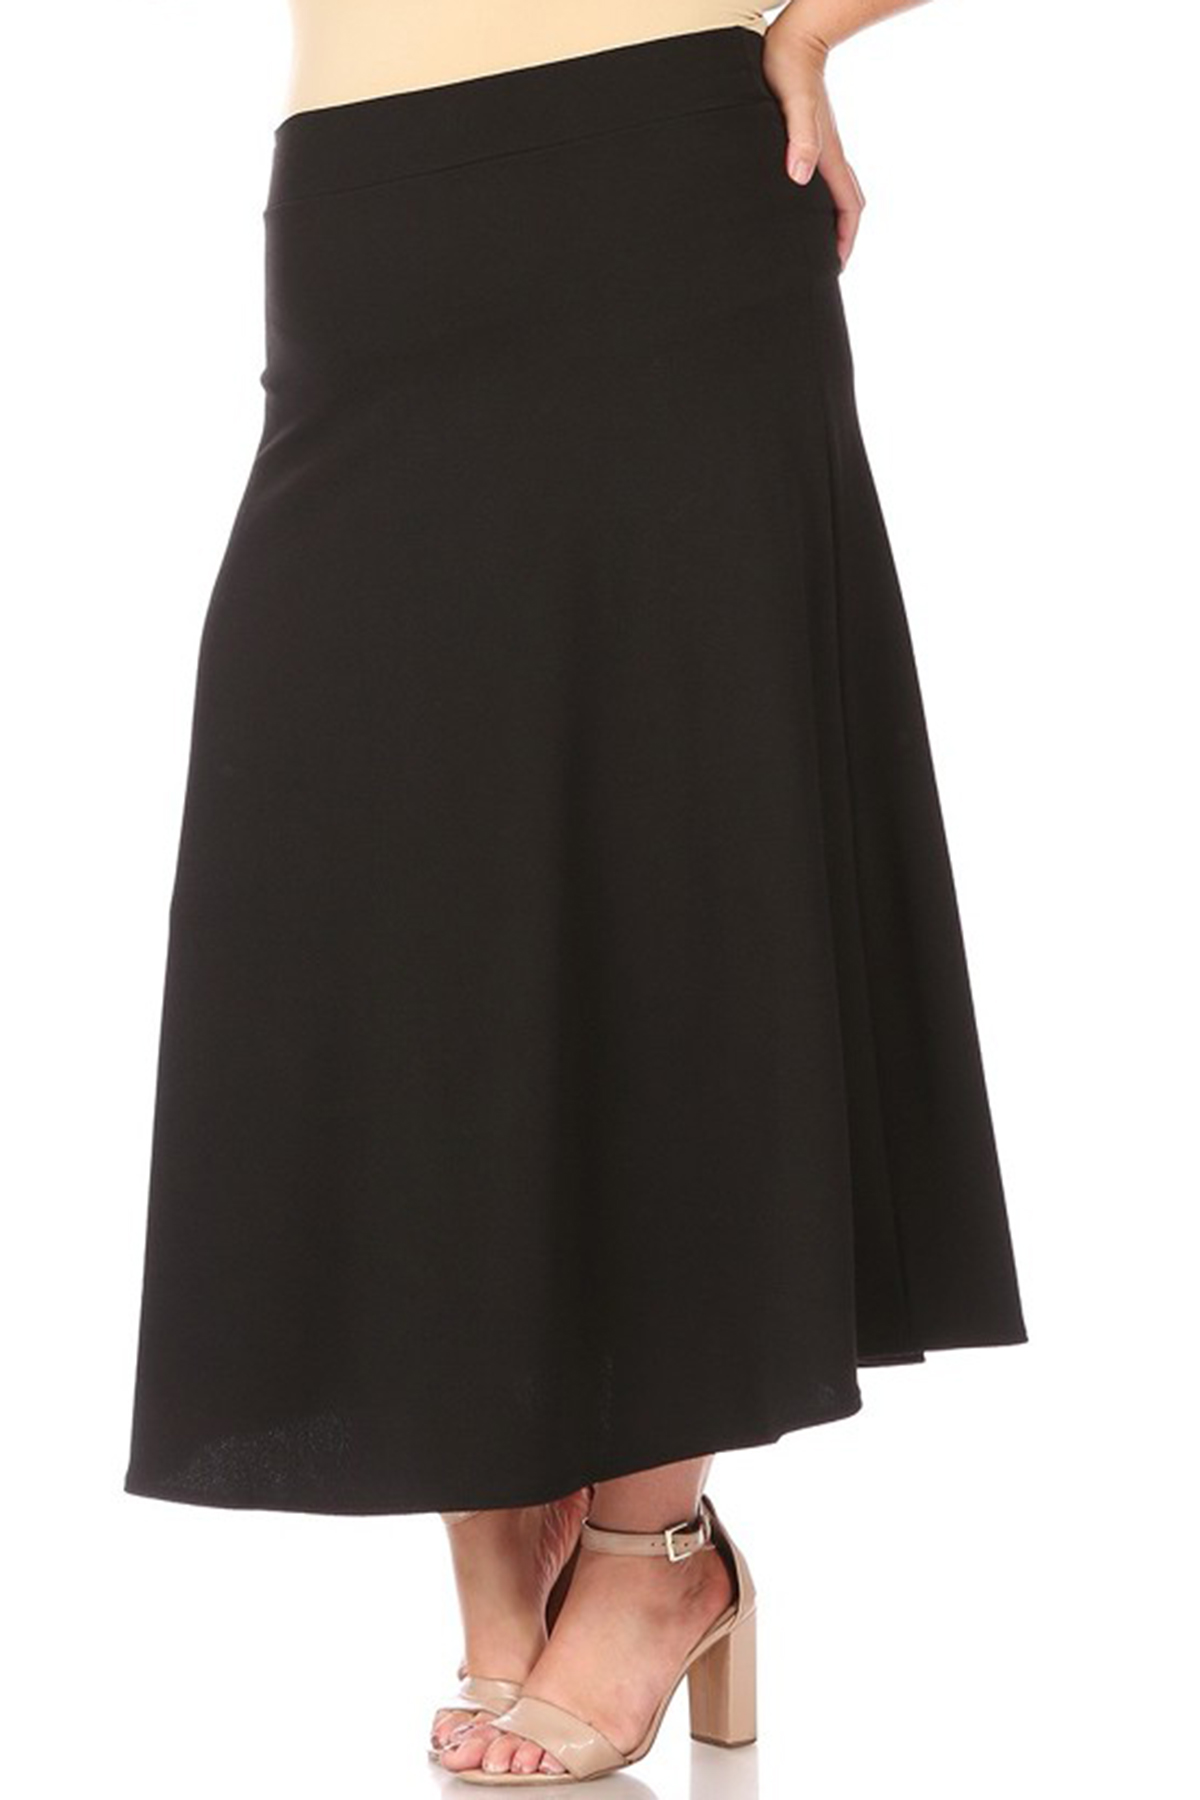 Women's Plus Size Solid Flare A-line Long Skirt - Walmart.com